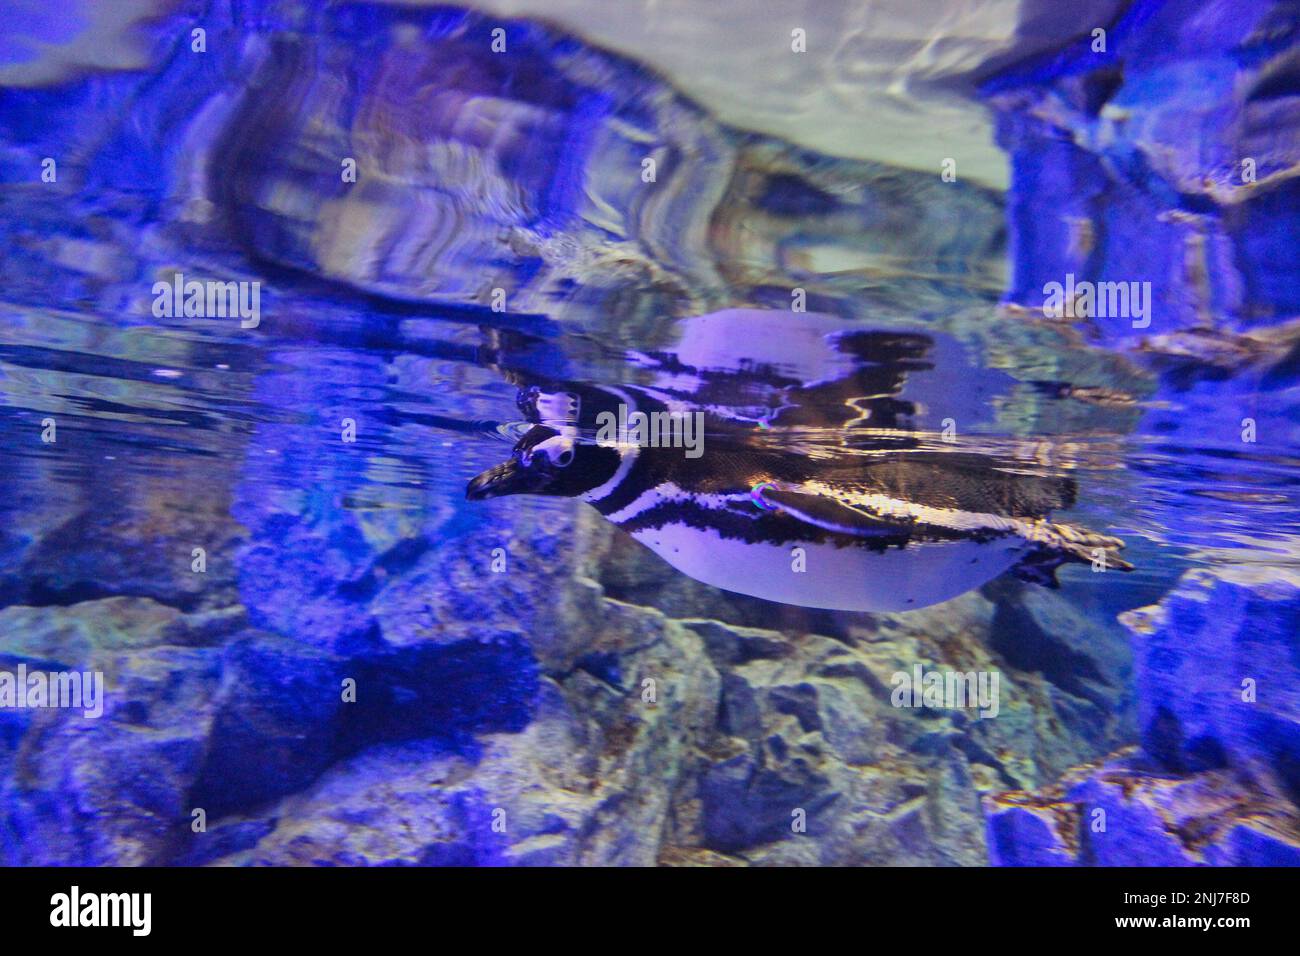 Full body shot of a swimming penguin underwater taken in a shimmering blue environment. Stock Photo